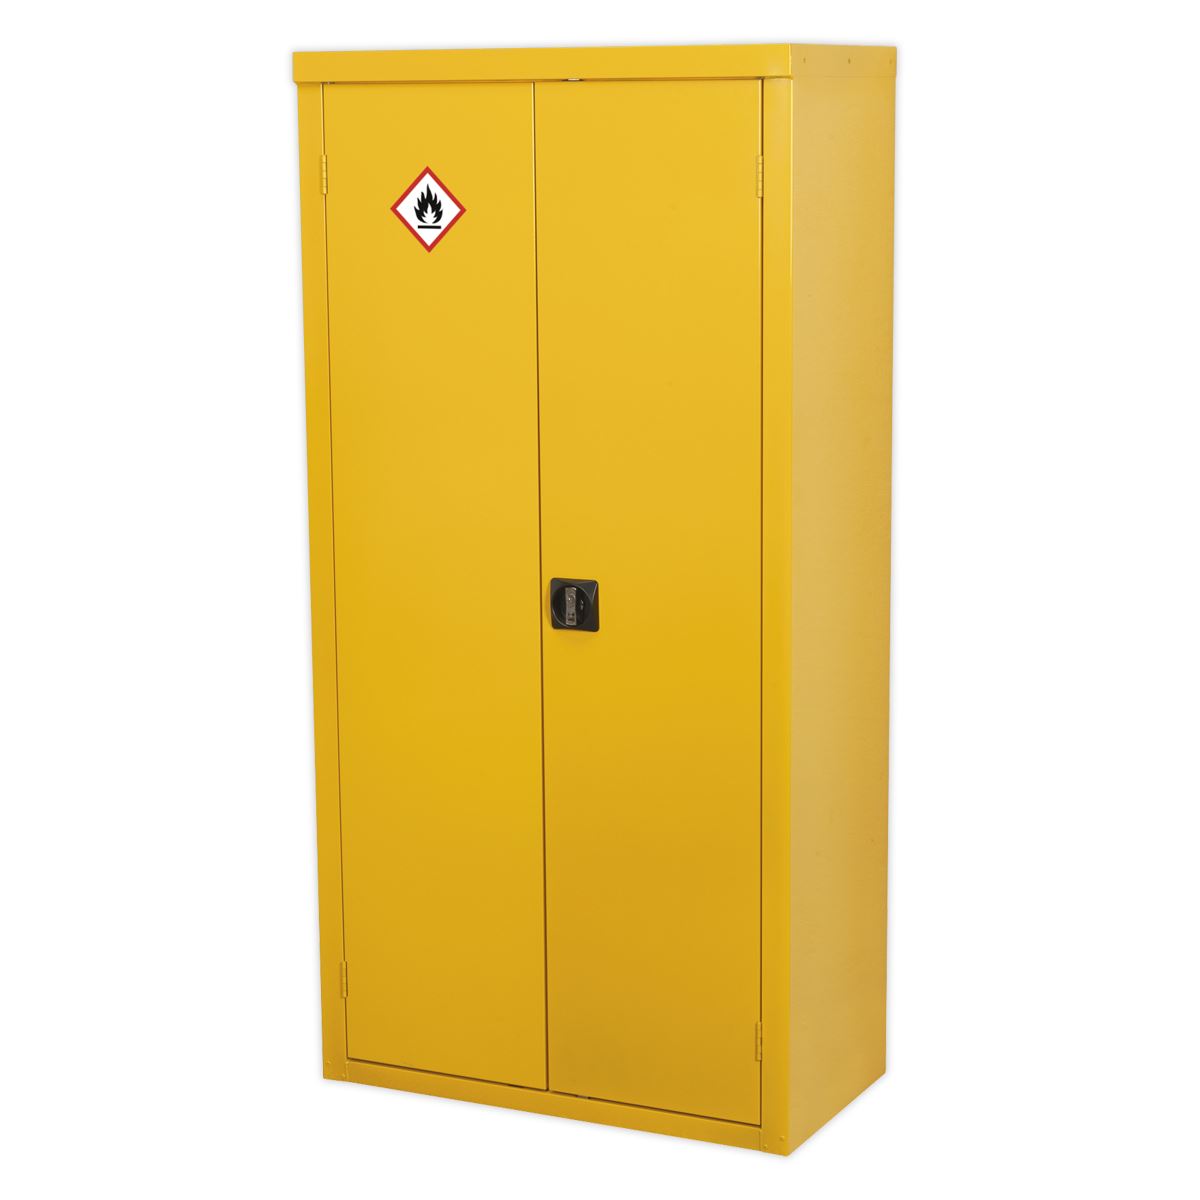 Sealey Hazardous Substance Cabinet 900 x 460 x 1800mm